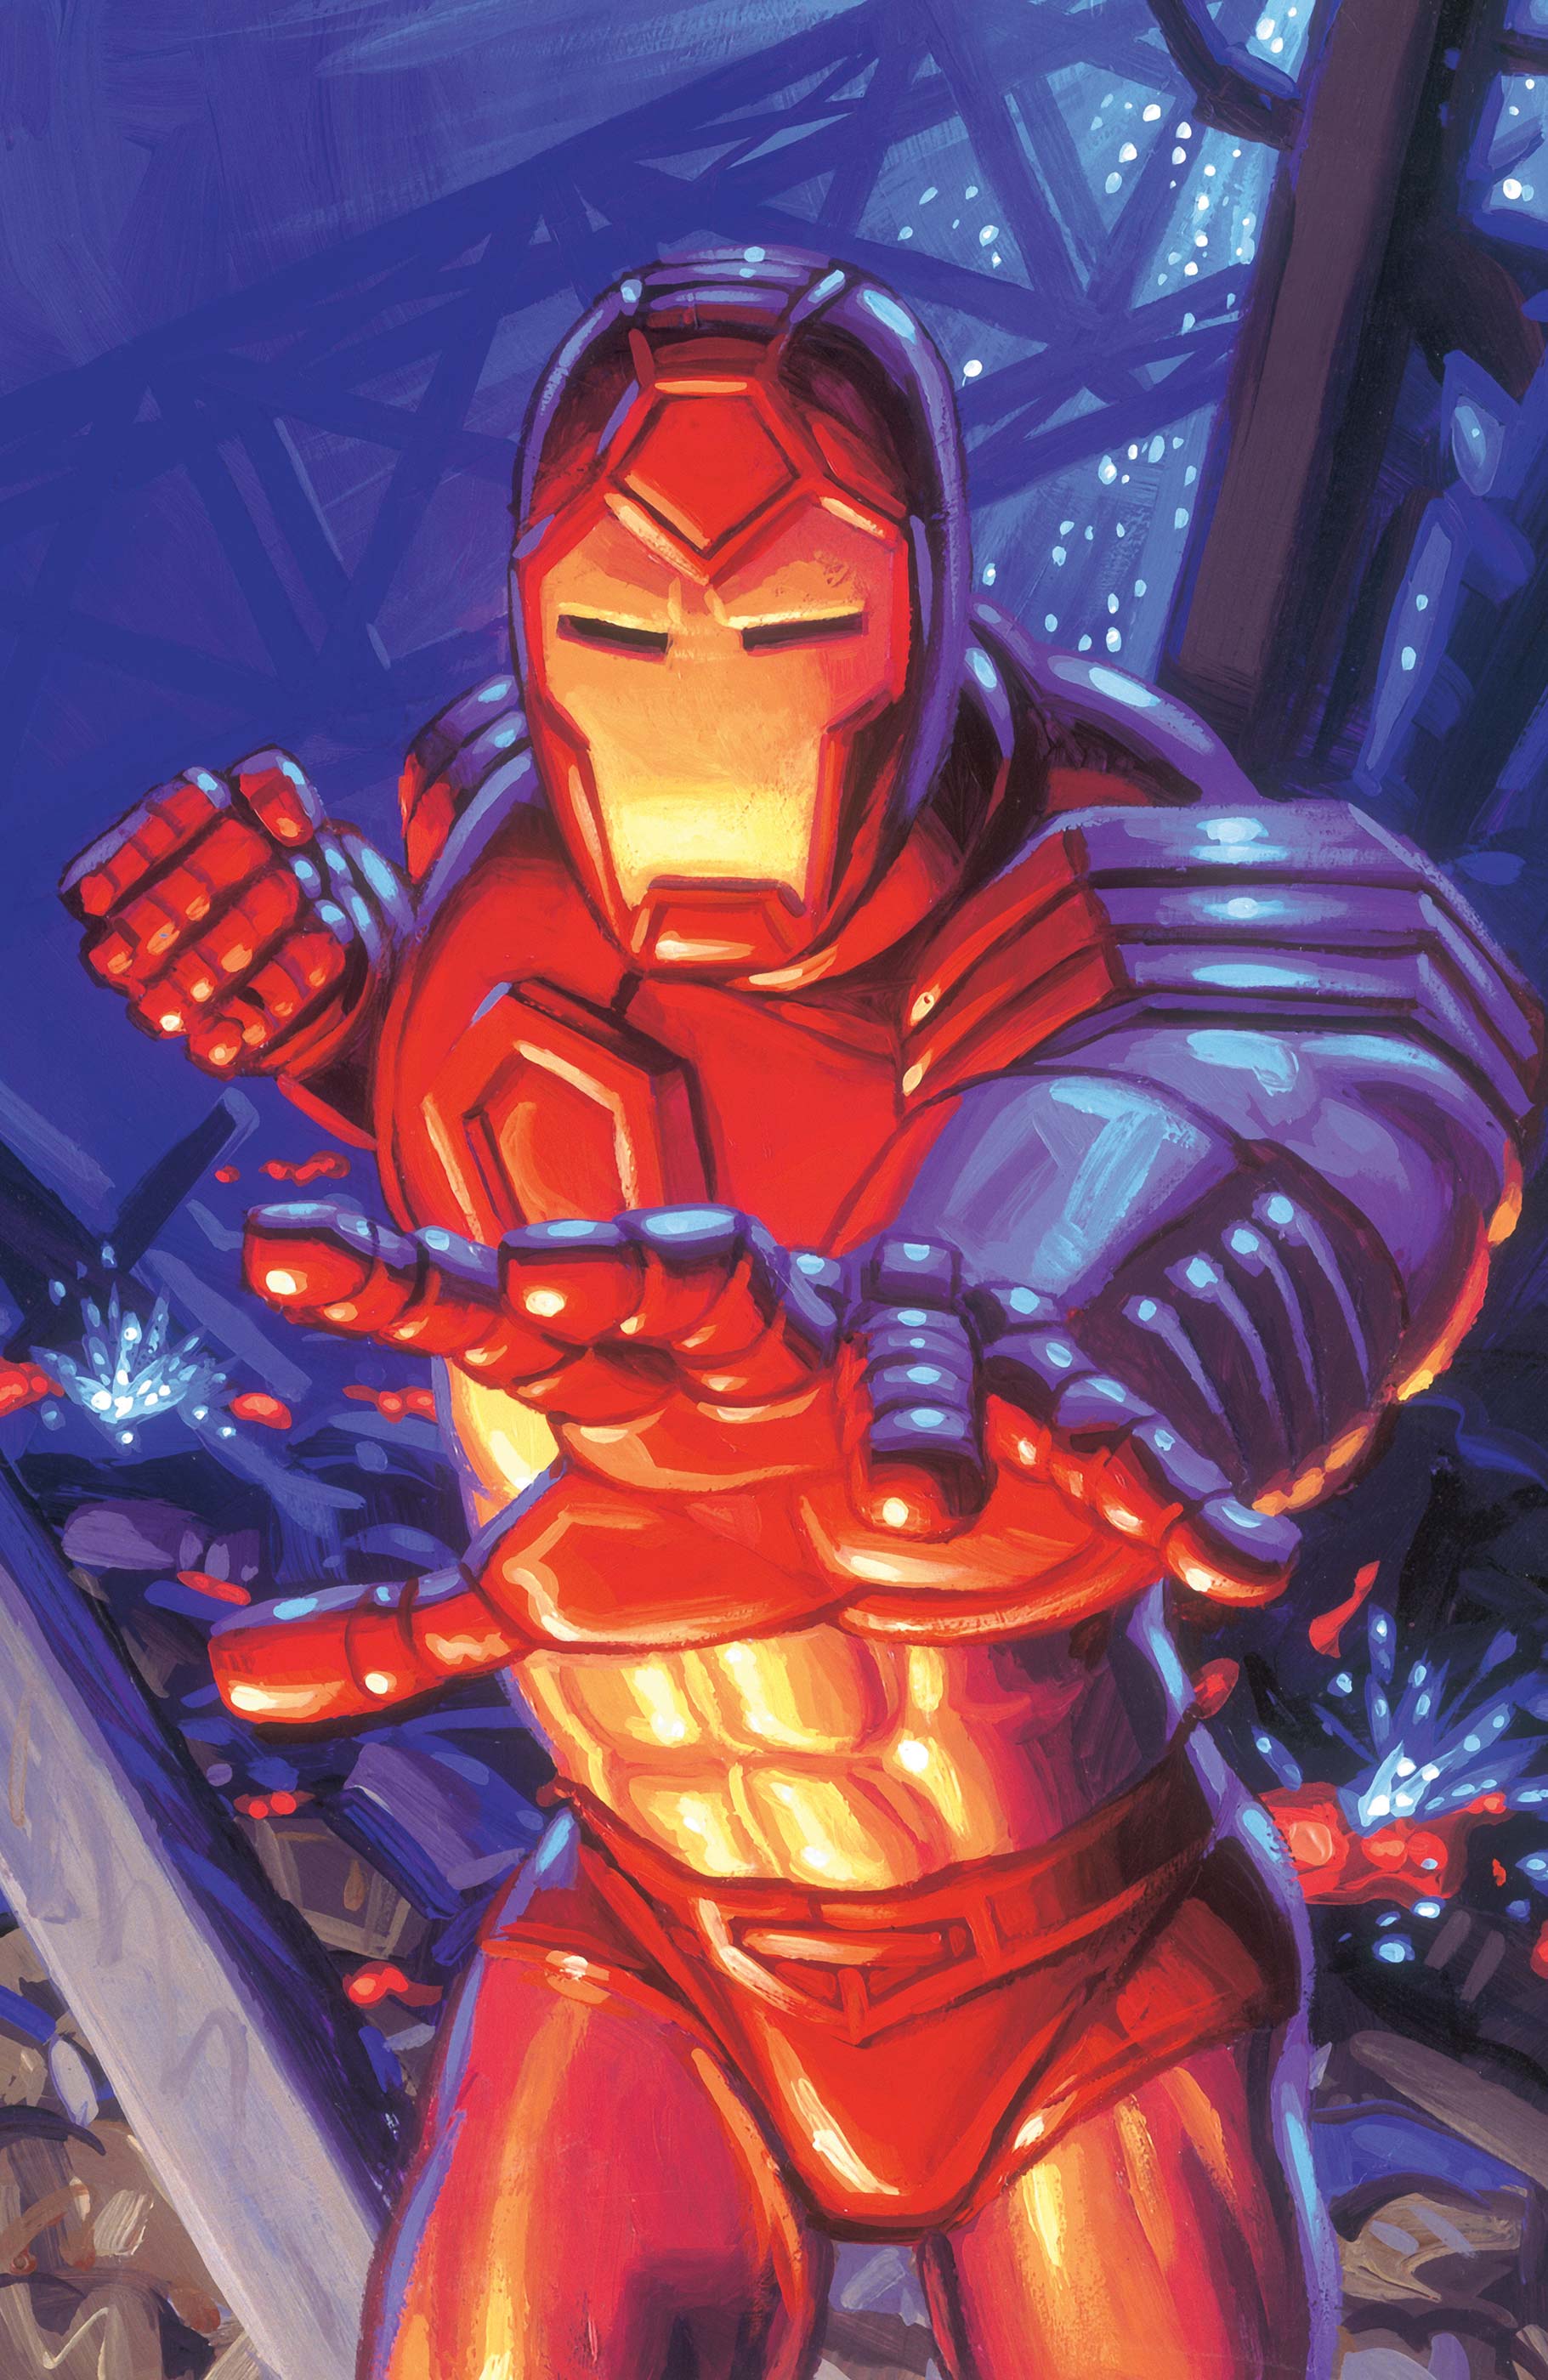 Invincible Iron Man (2022) #14 (Variant)